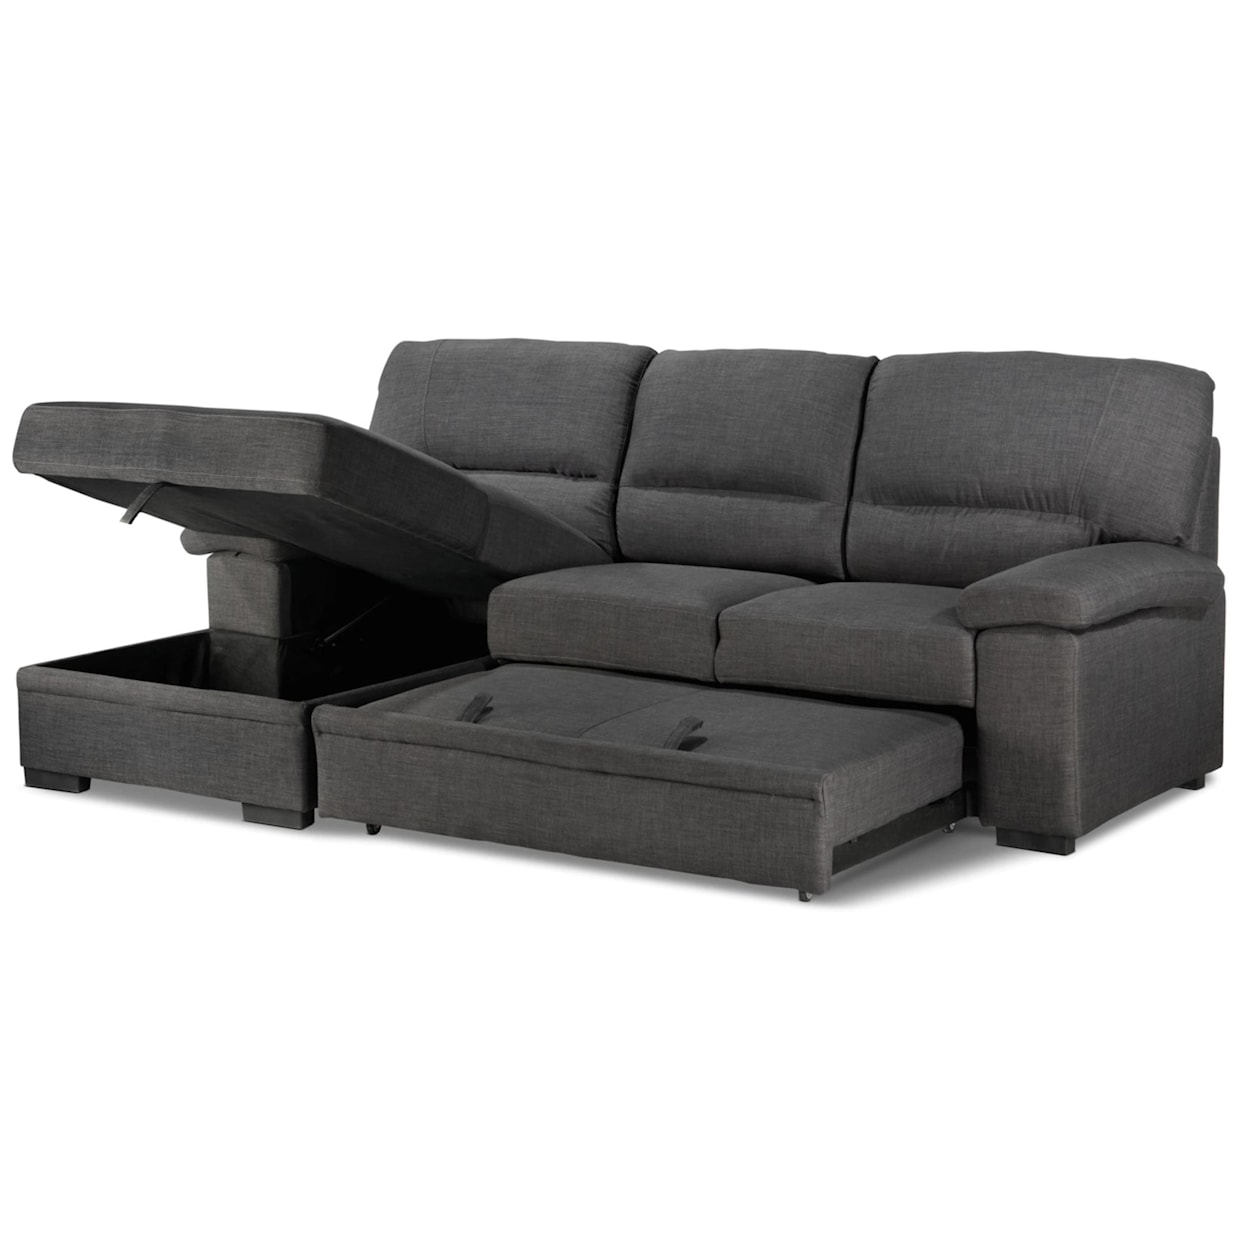 Primo International Tessaro Sleeper Sofa with Storage